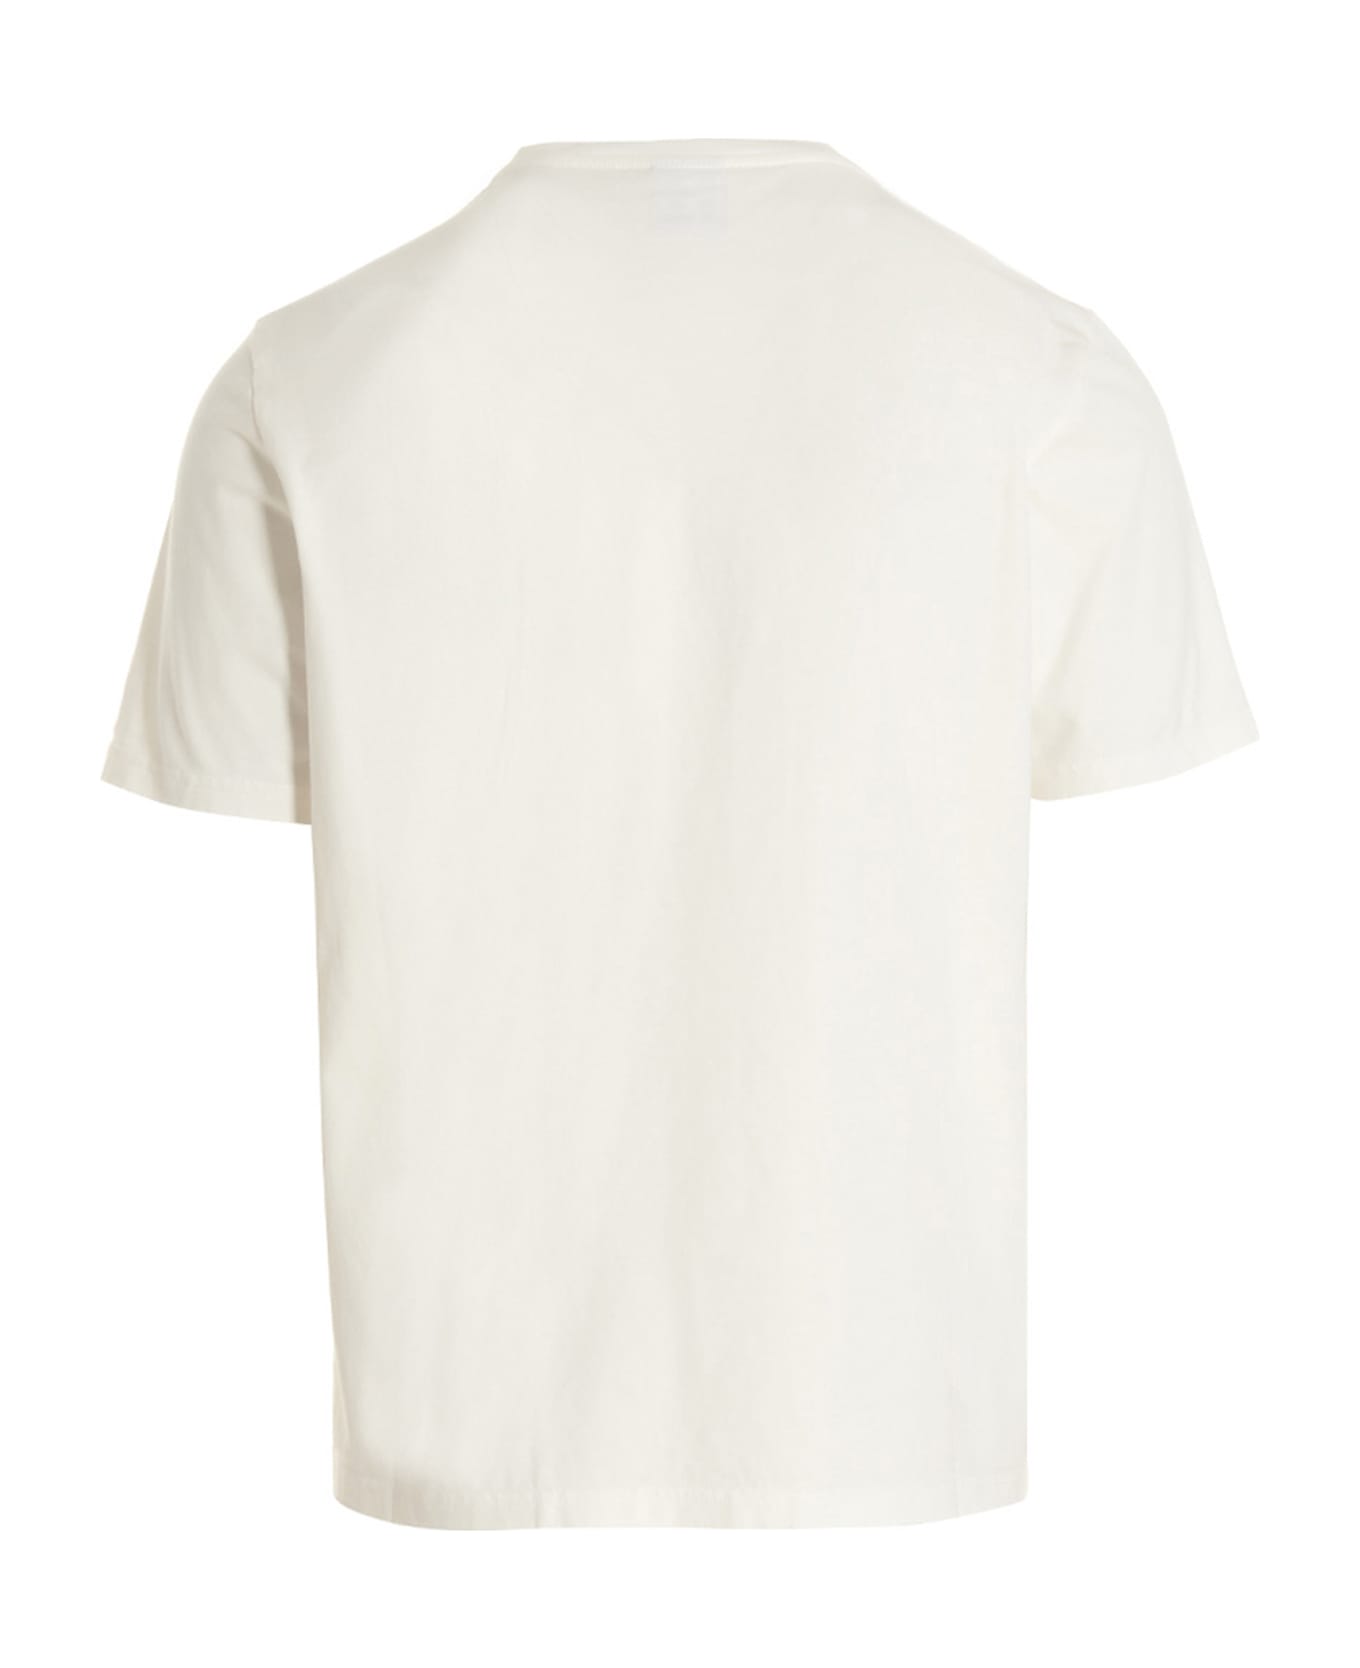 Autry T-shirt In White Cotton - WHITE